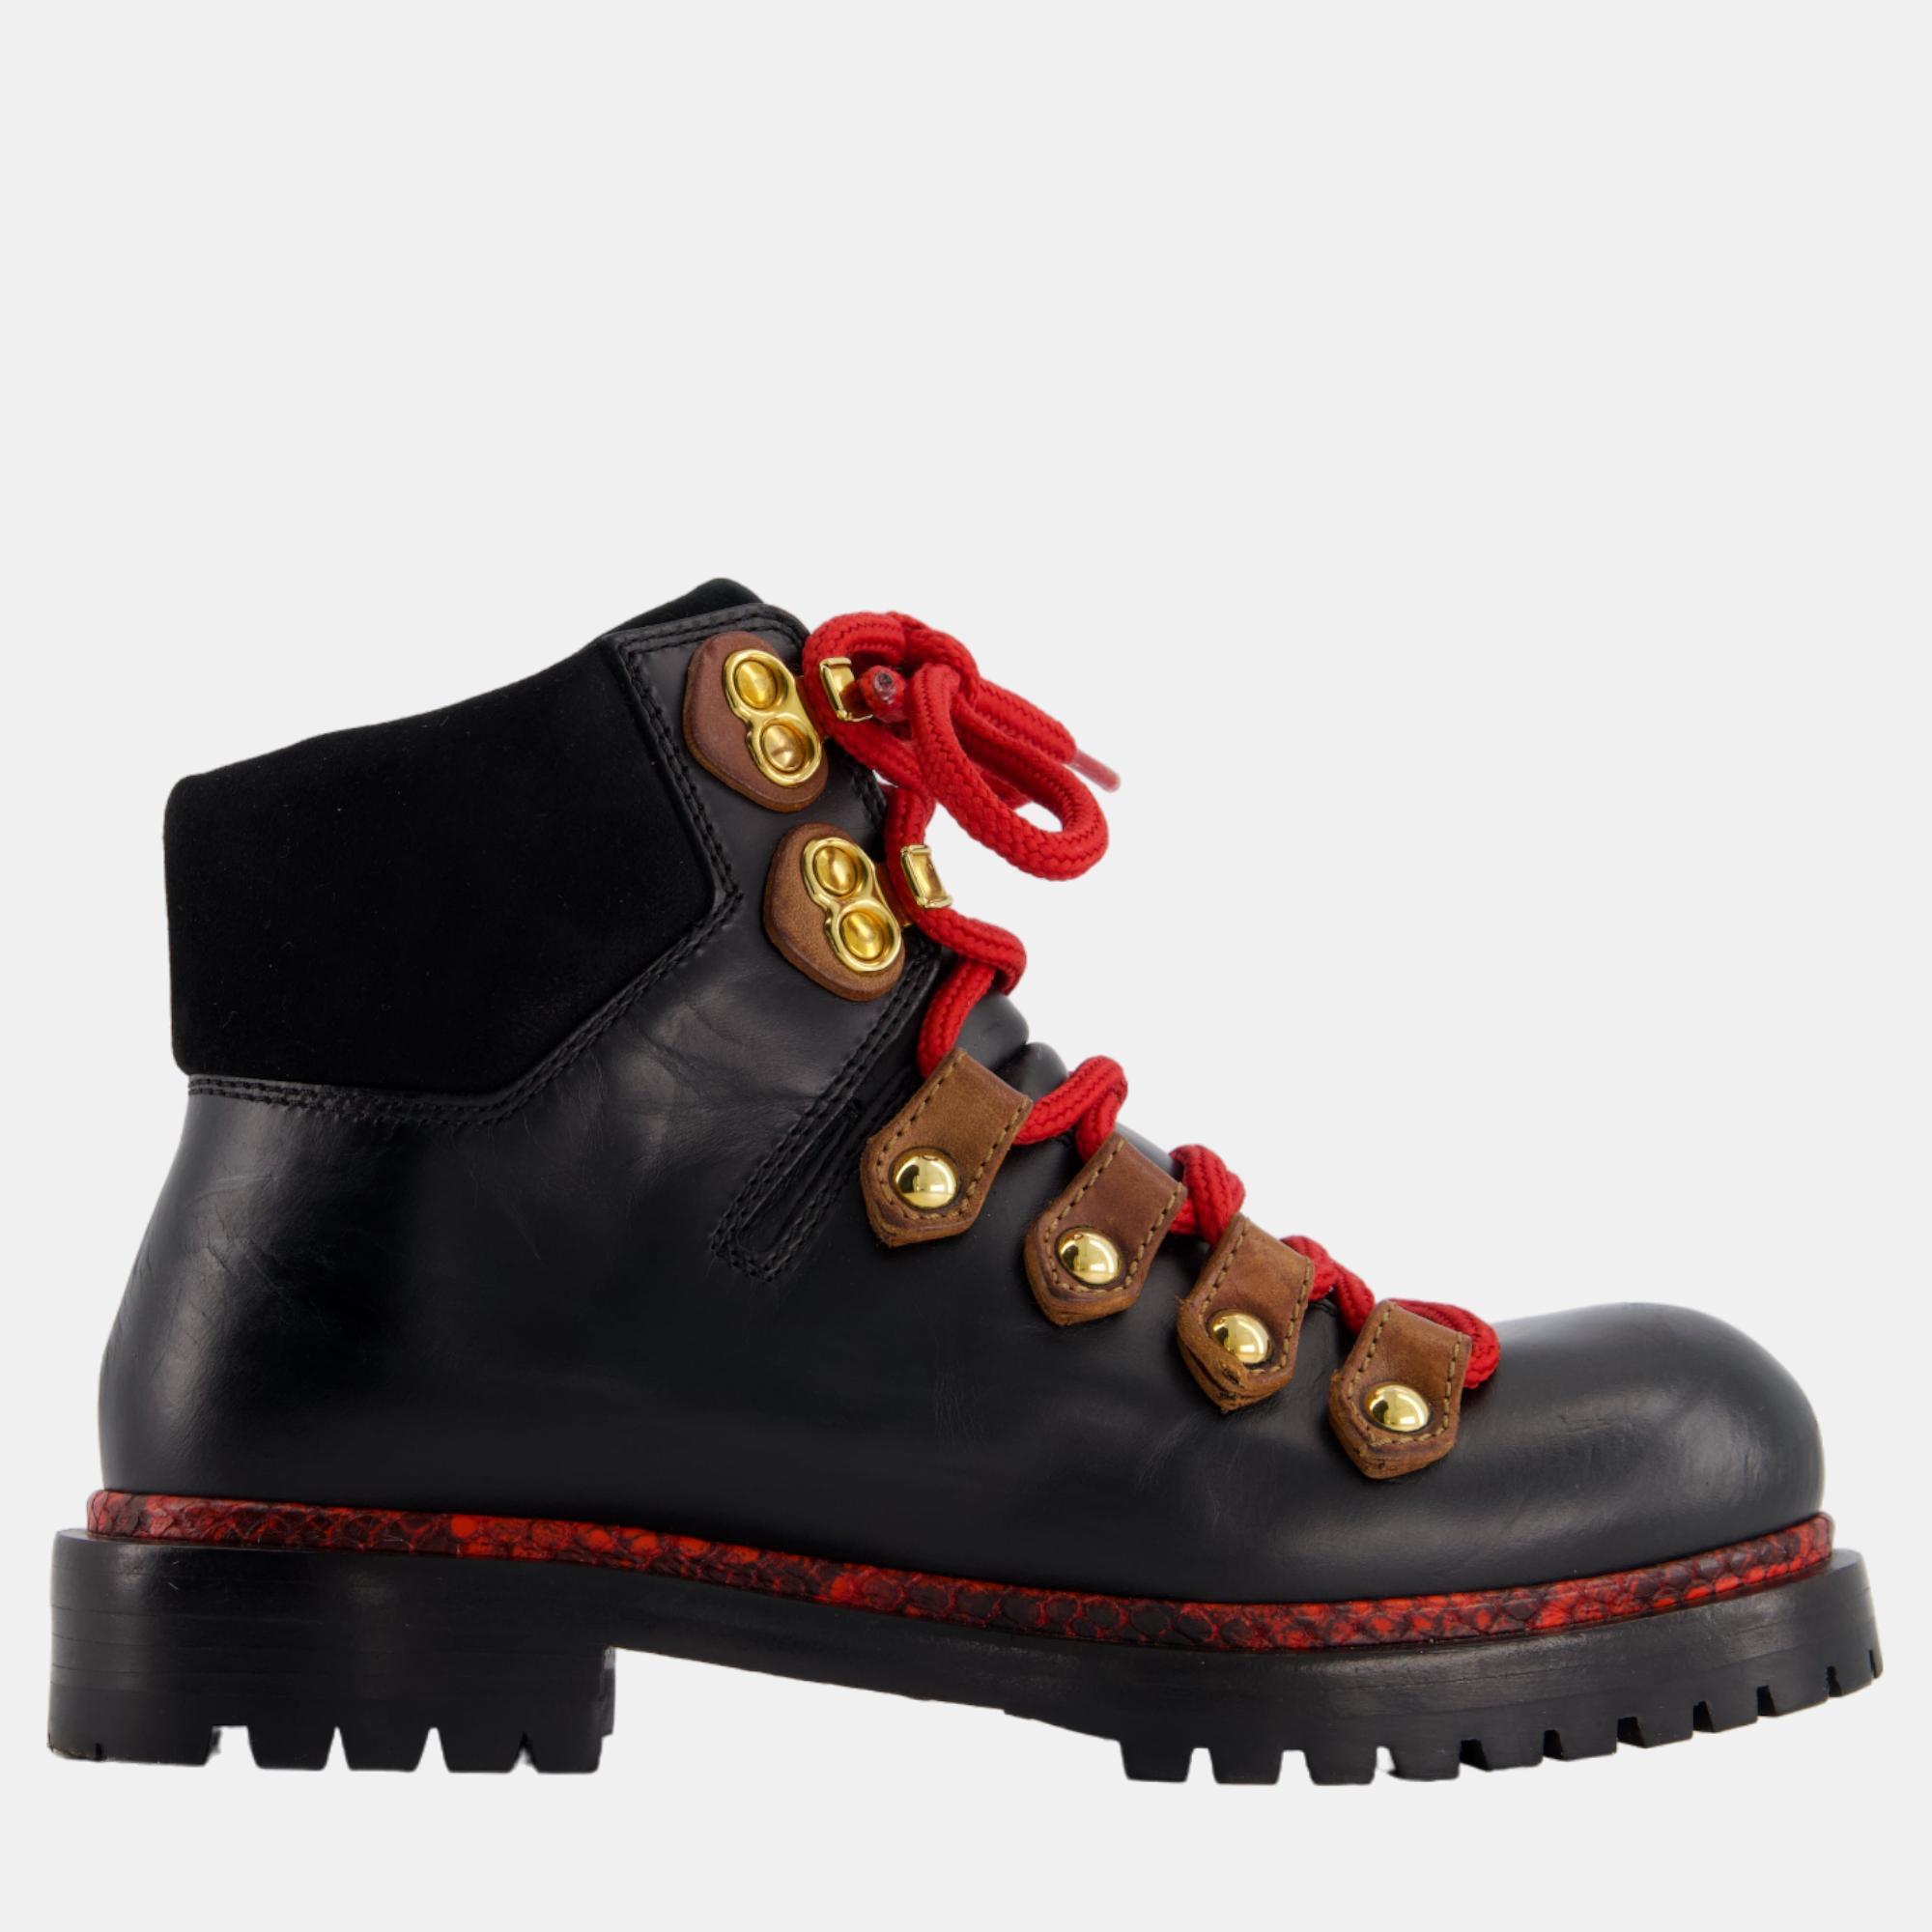 Louis vuitton black ankle boot with red python trim lace detail size eu 35.5